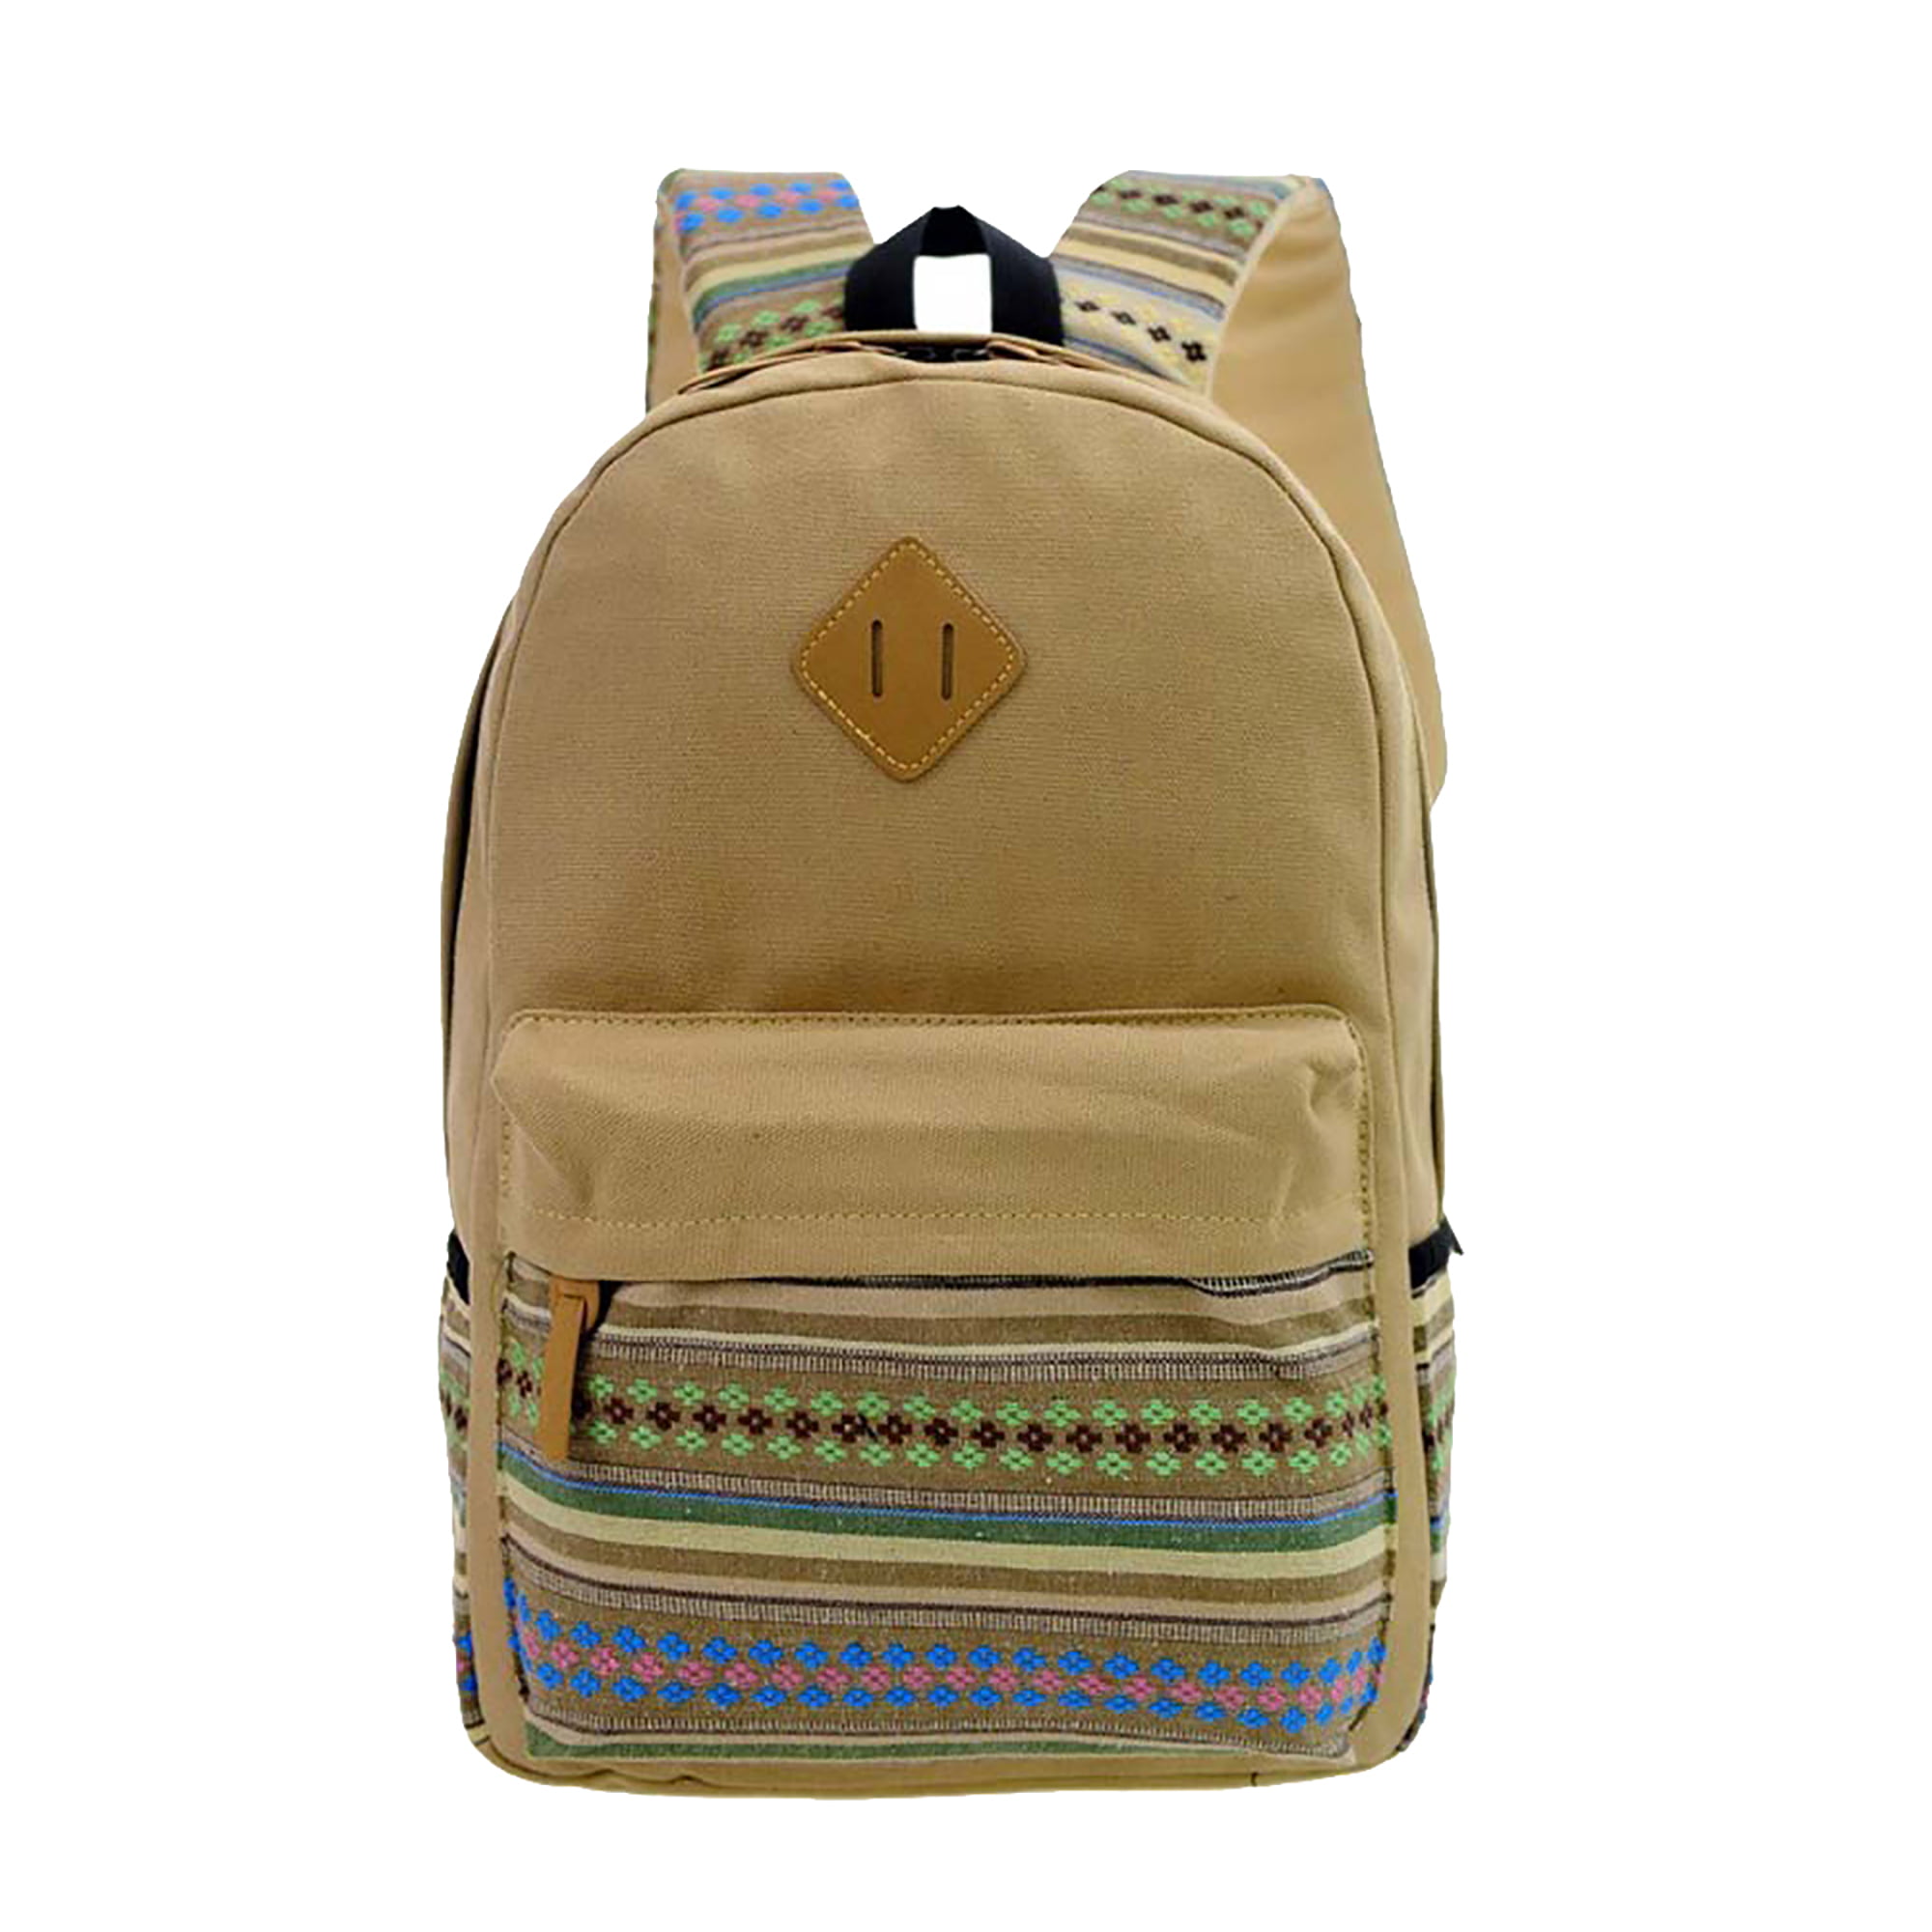 Backpack American Texas Star School Backpack 3D Printed Laptop Bag Teens Canvas Shoulder Bag Lightweight Travel Bag for Outdoor School Colleague Office 